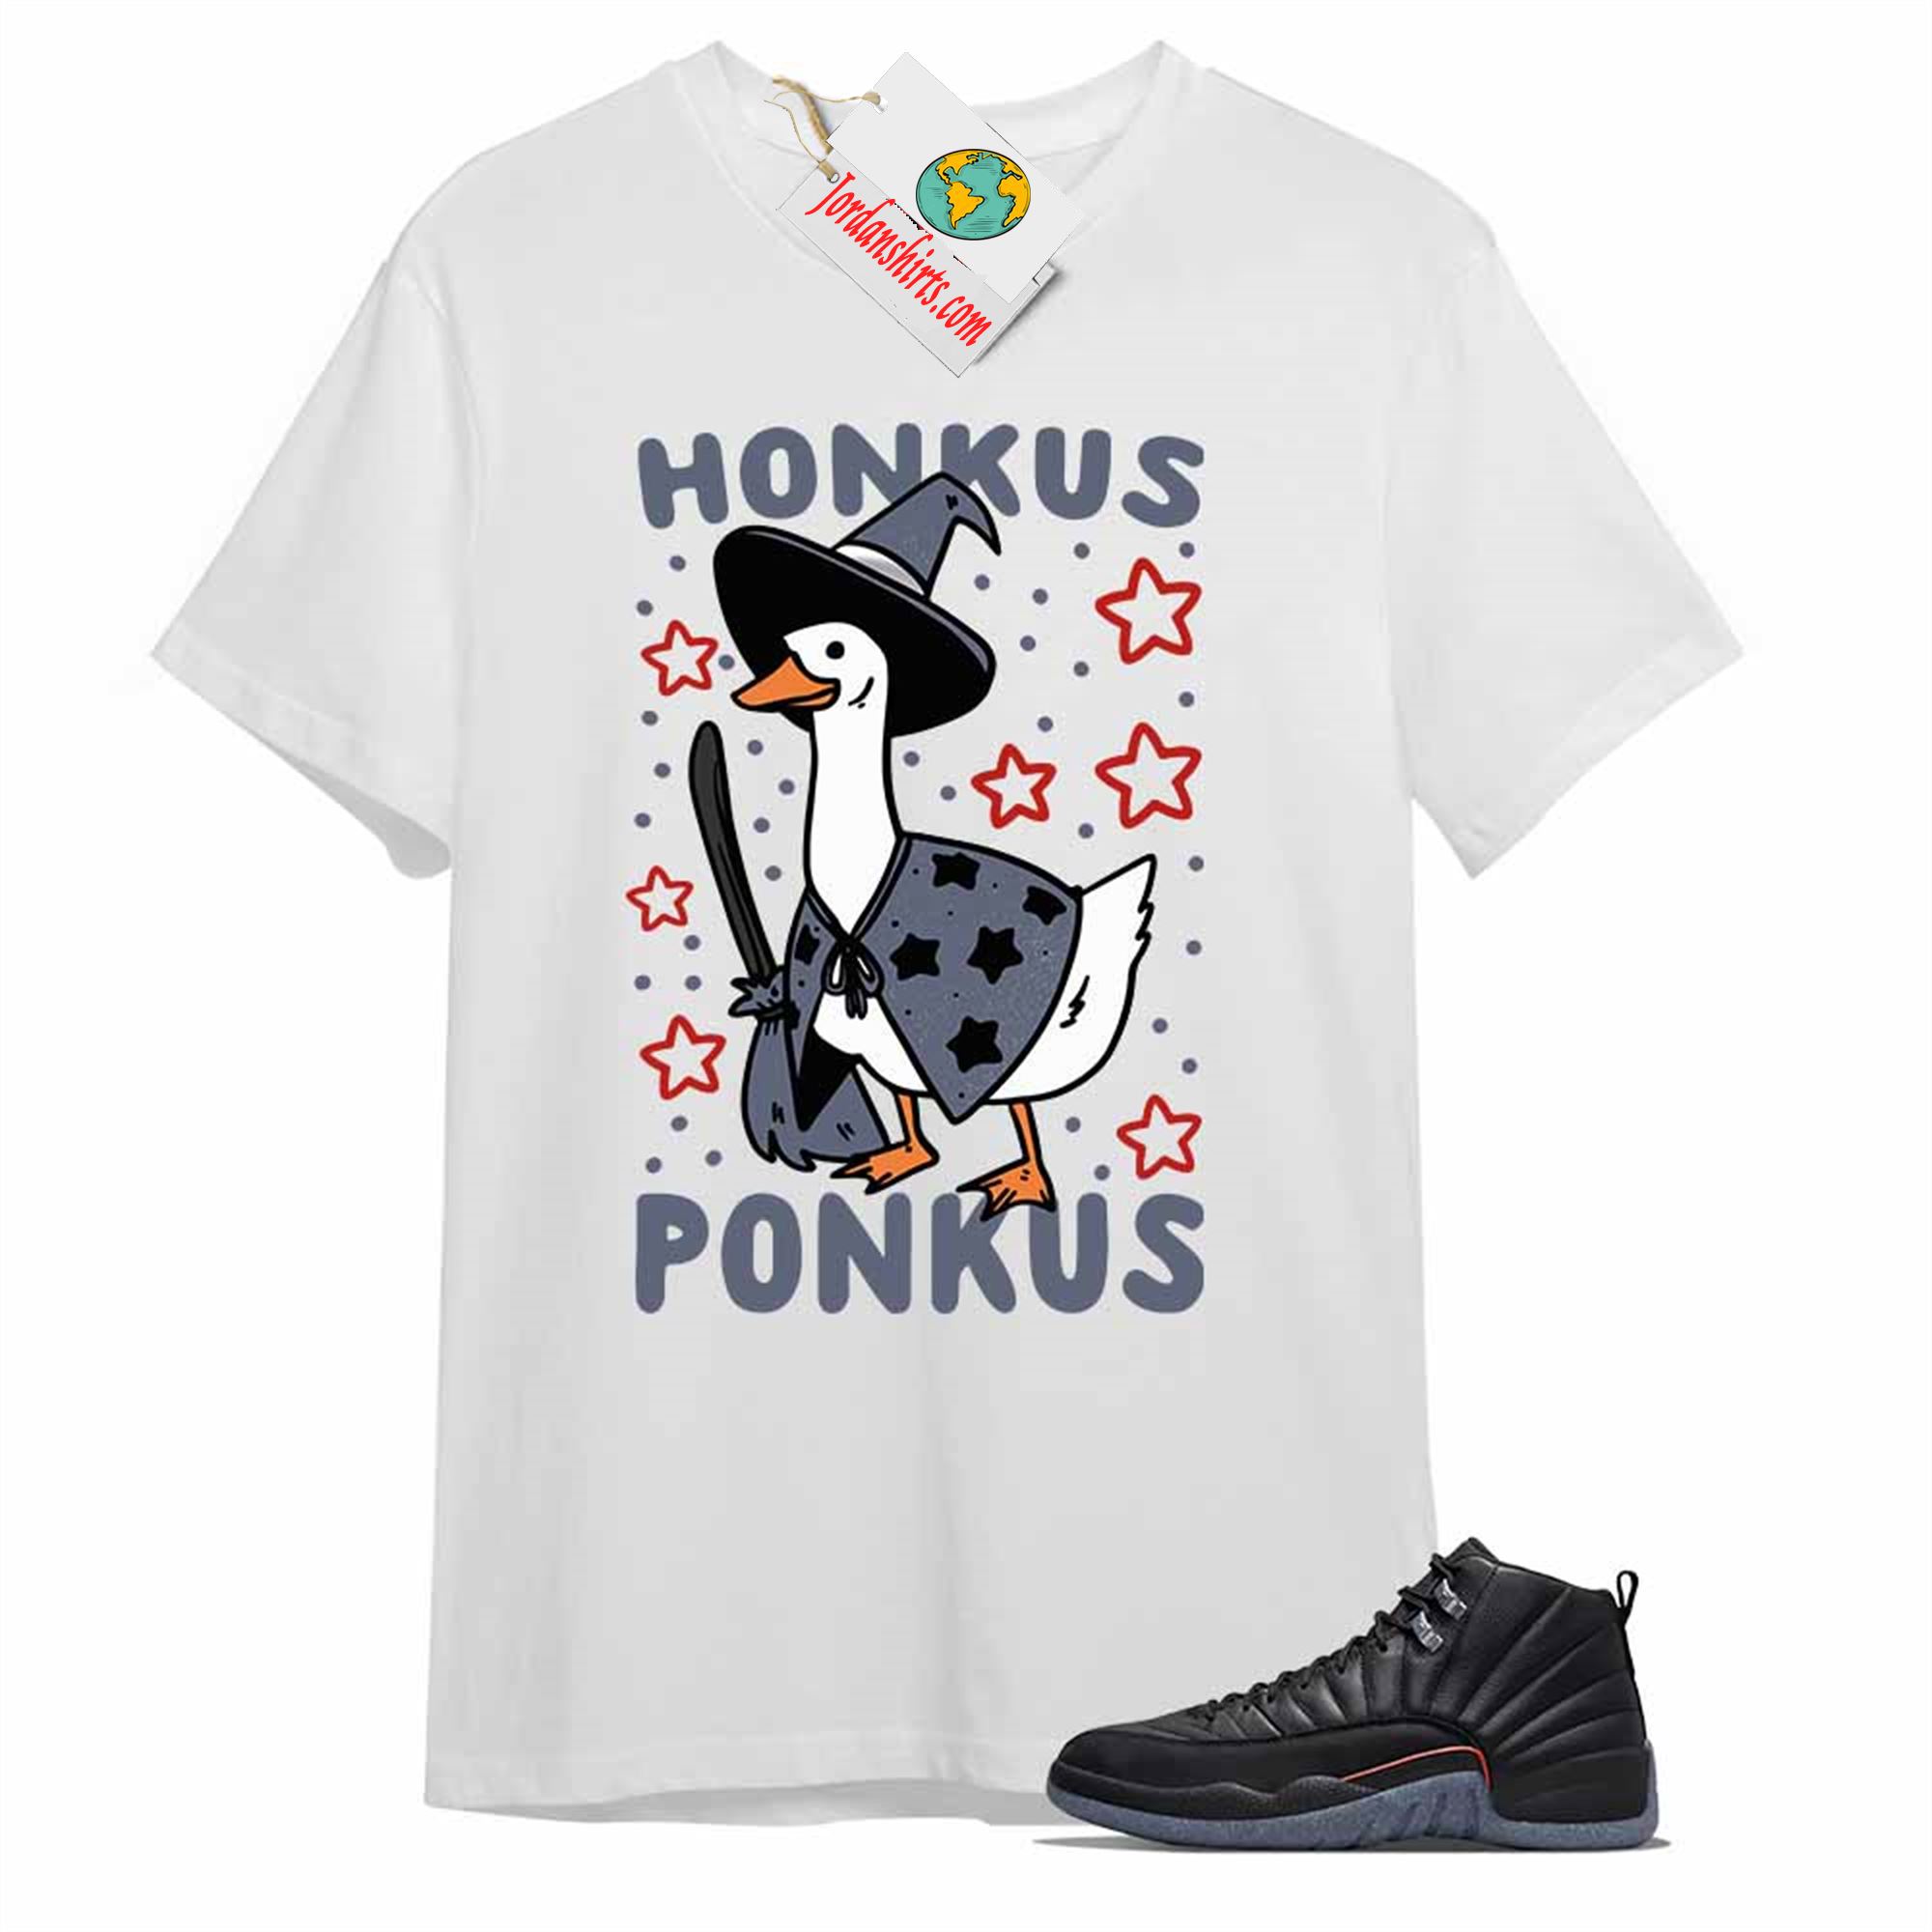 Jordan 12 Shirt, Witches Duck Honkus Ponkus White T-shirt Air Jordan 12 Utility Grind 12s Size Up To 5xl